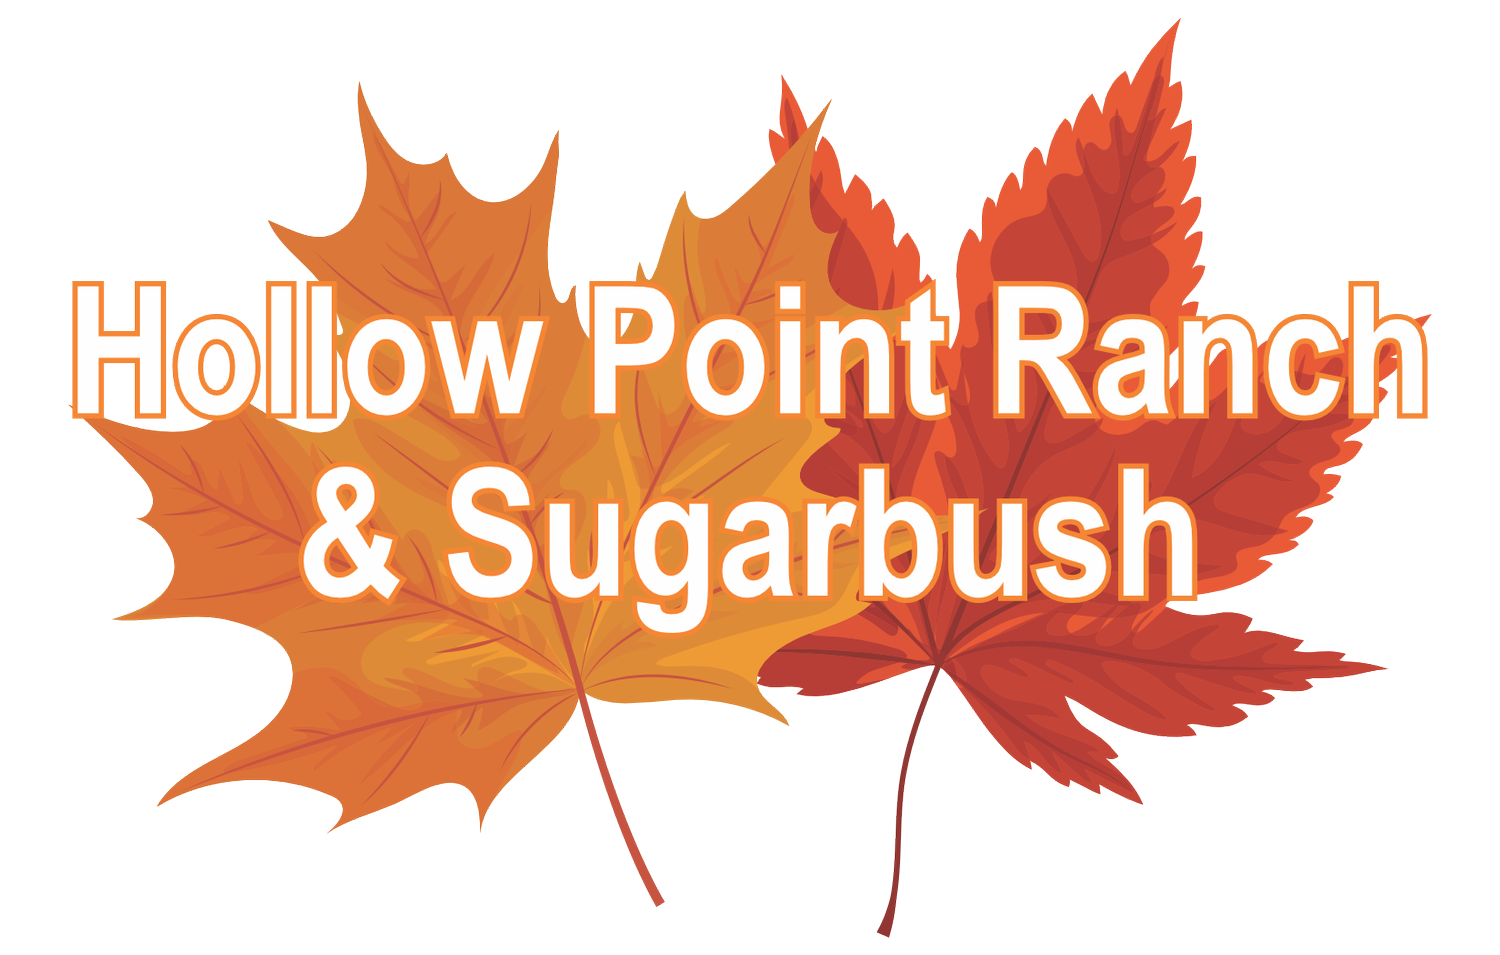 Hollow Point Ranch and Sugarbush